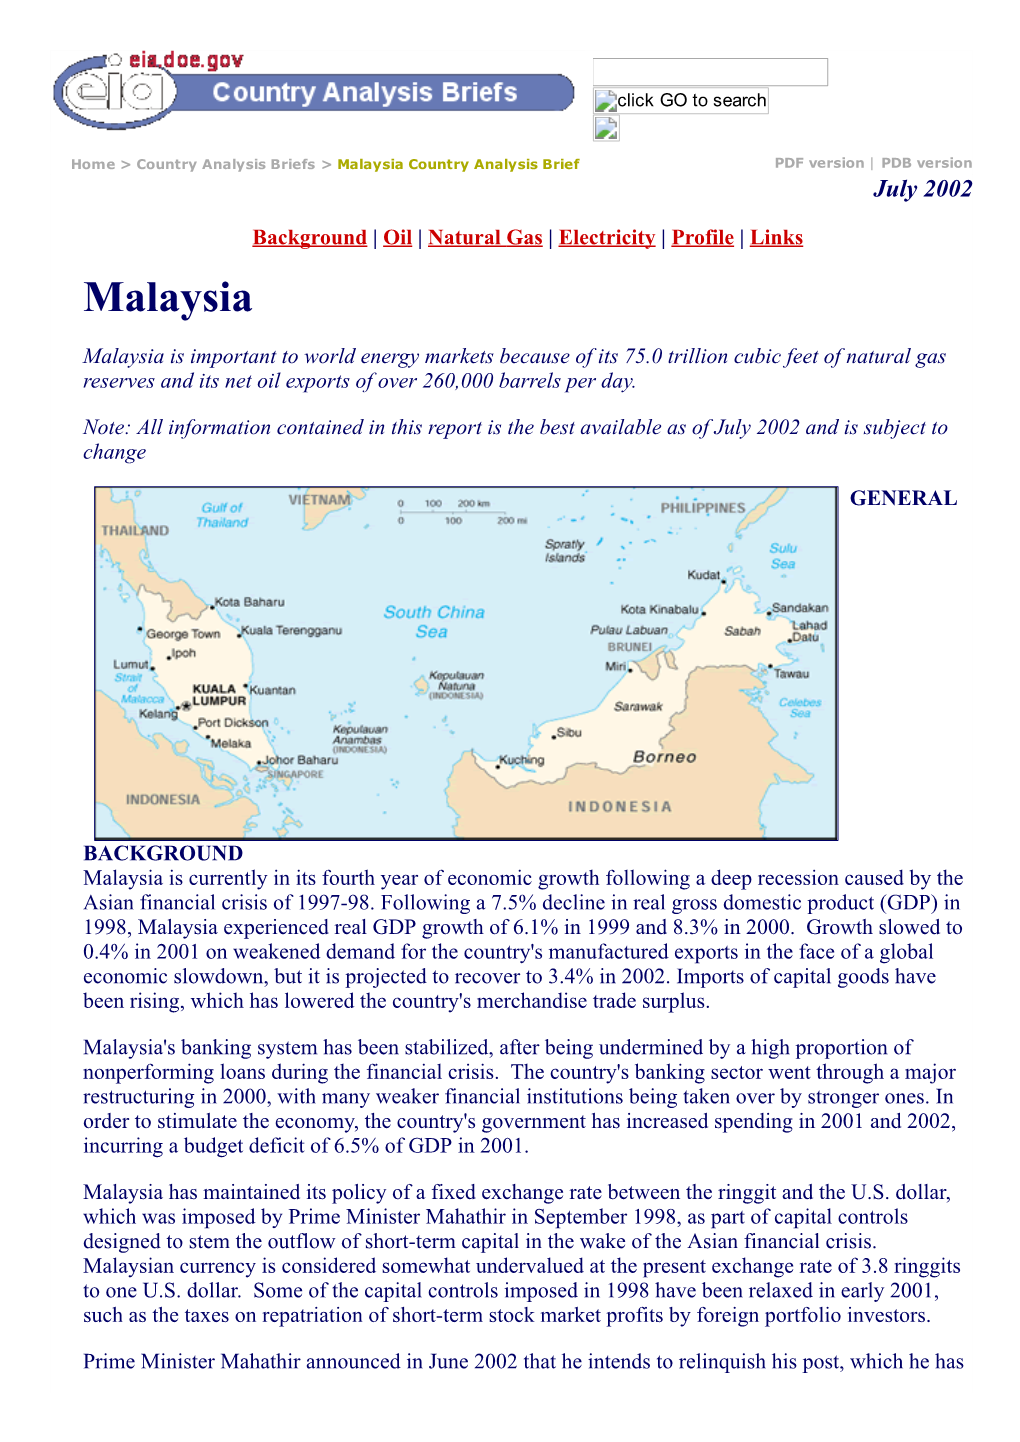 Malaysia Country Analysis Brief PDF Version | PDB Version July 2002